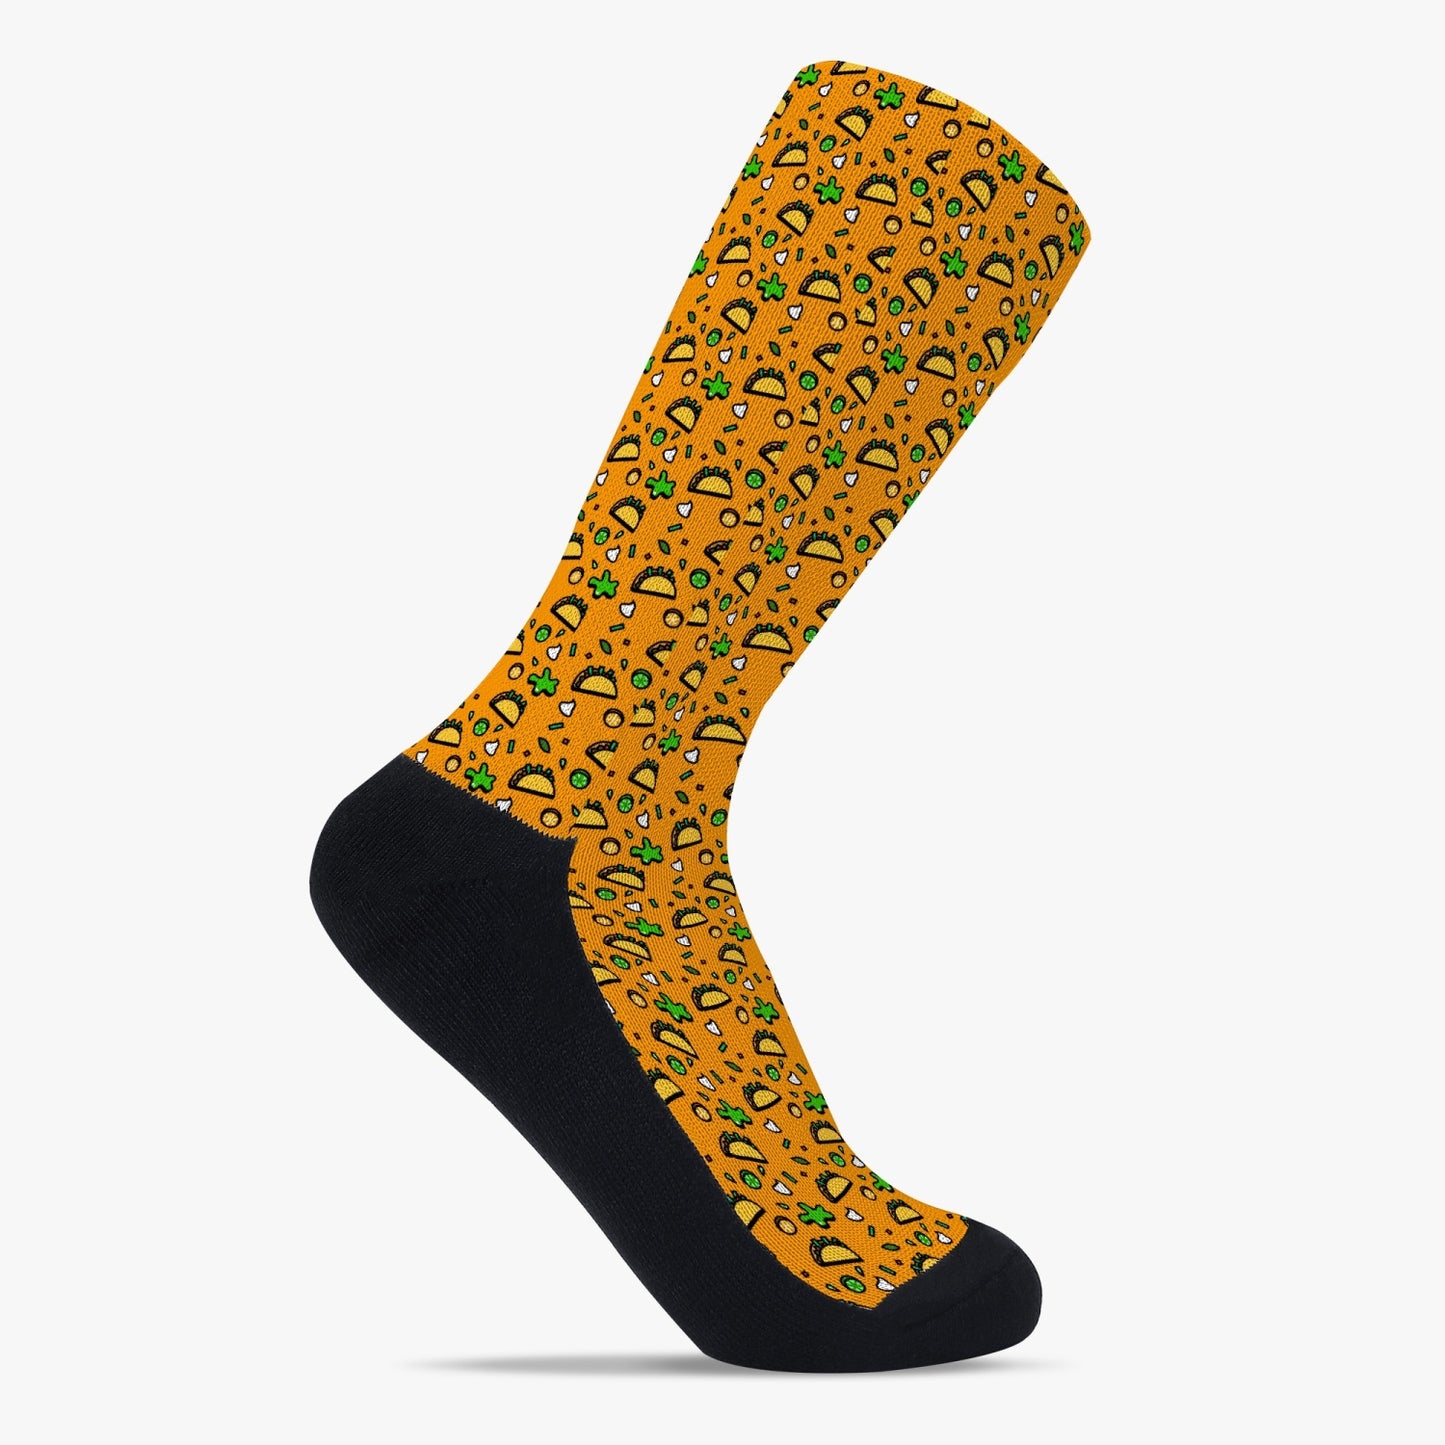 🌮 Taco Flavorful Socks